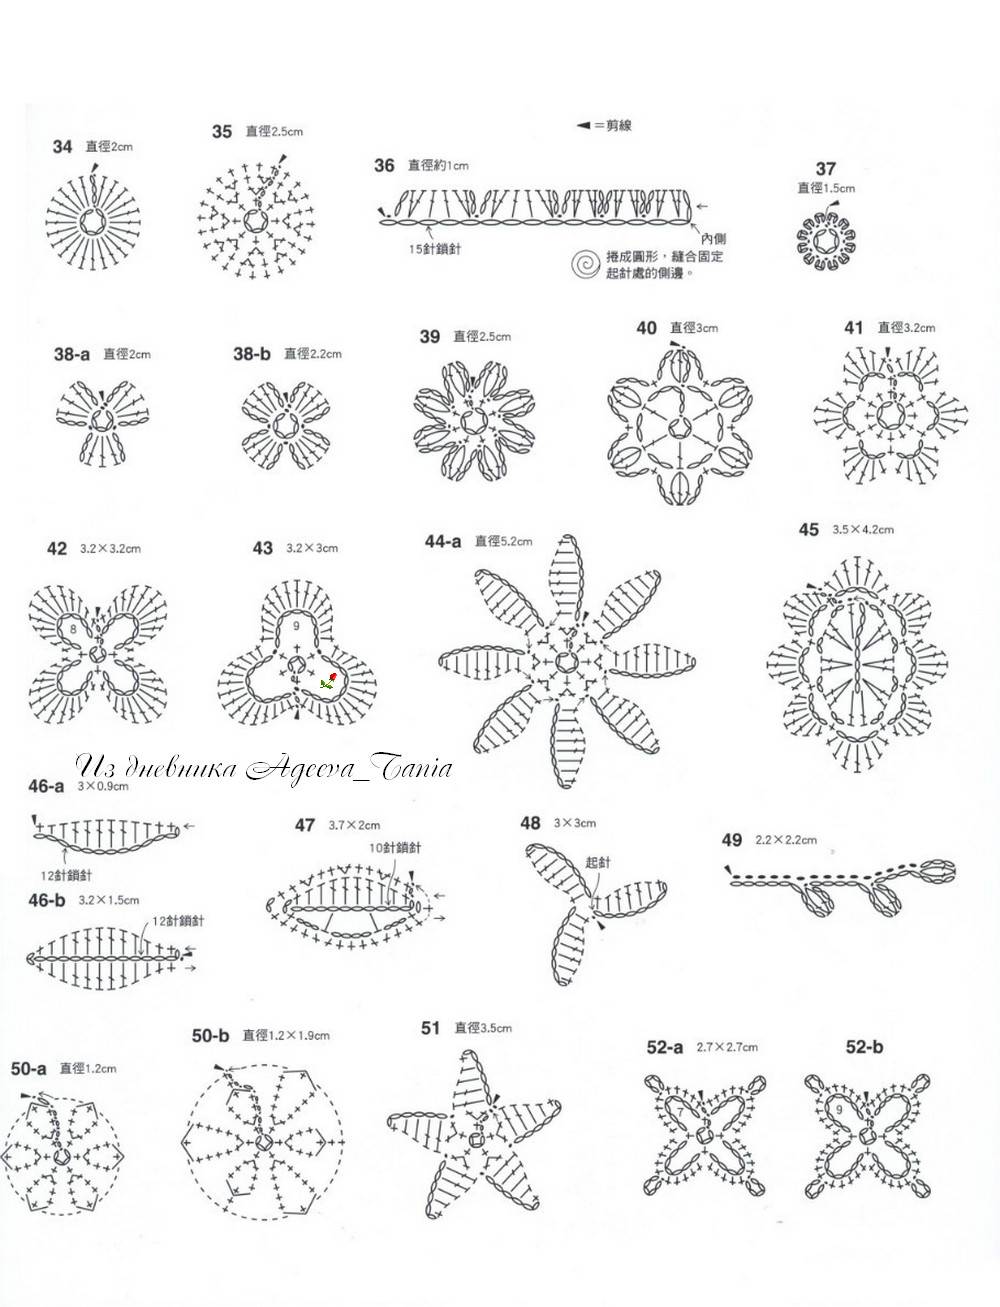 Small Botanical Crochet Motif Patterns ⋆ Crochet Kingdom